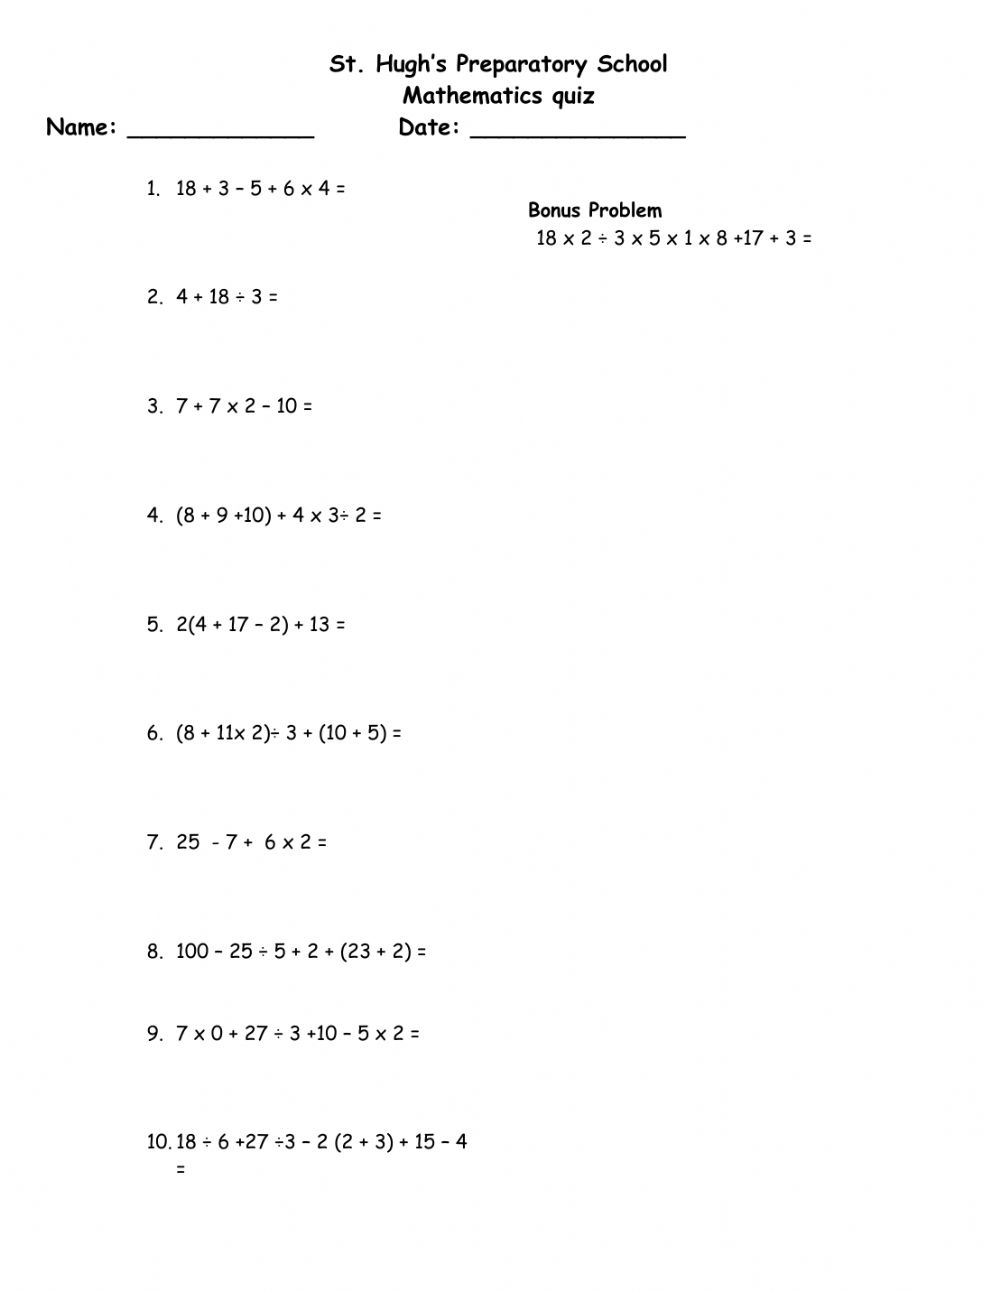 Order Of Operations PEMDAS Worksheet - Math Worksheet Answers